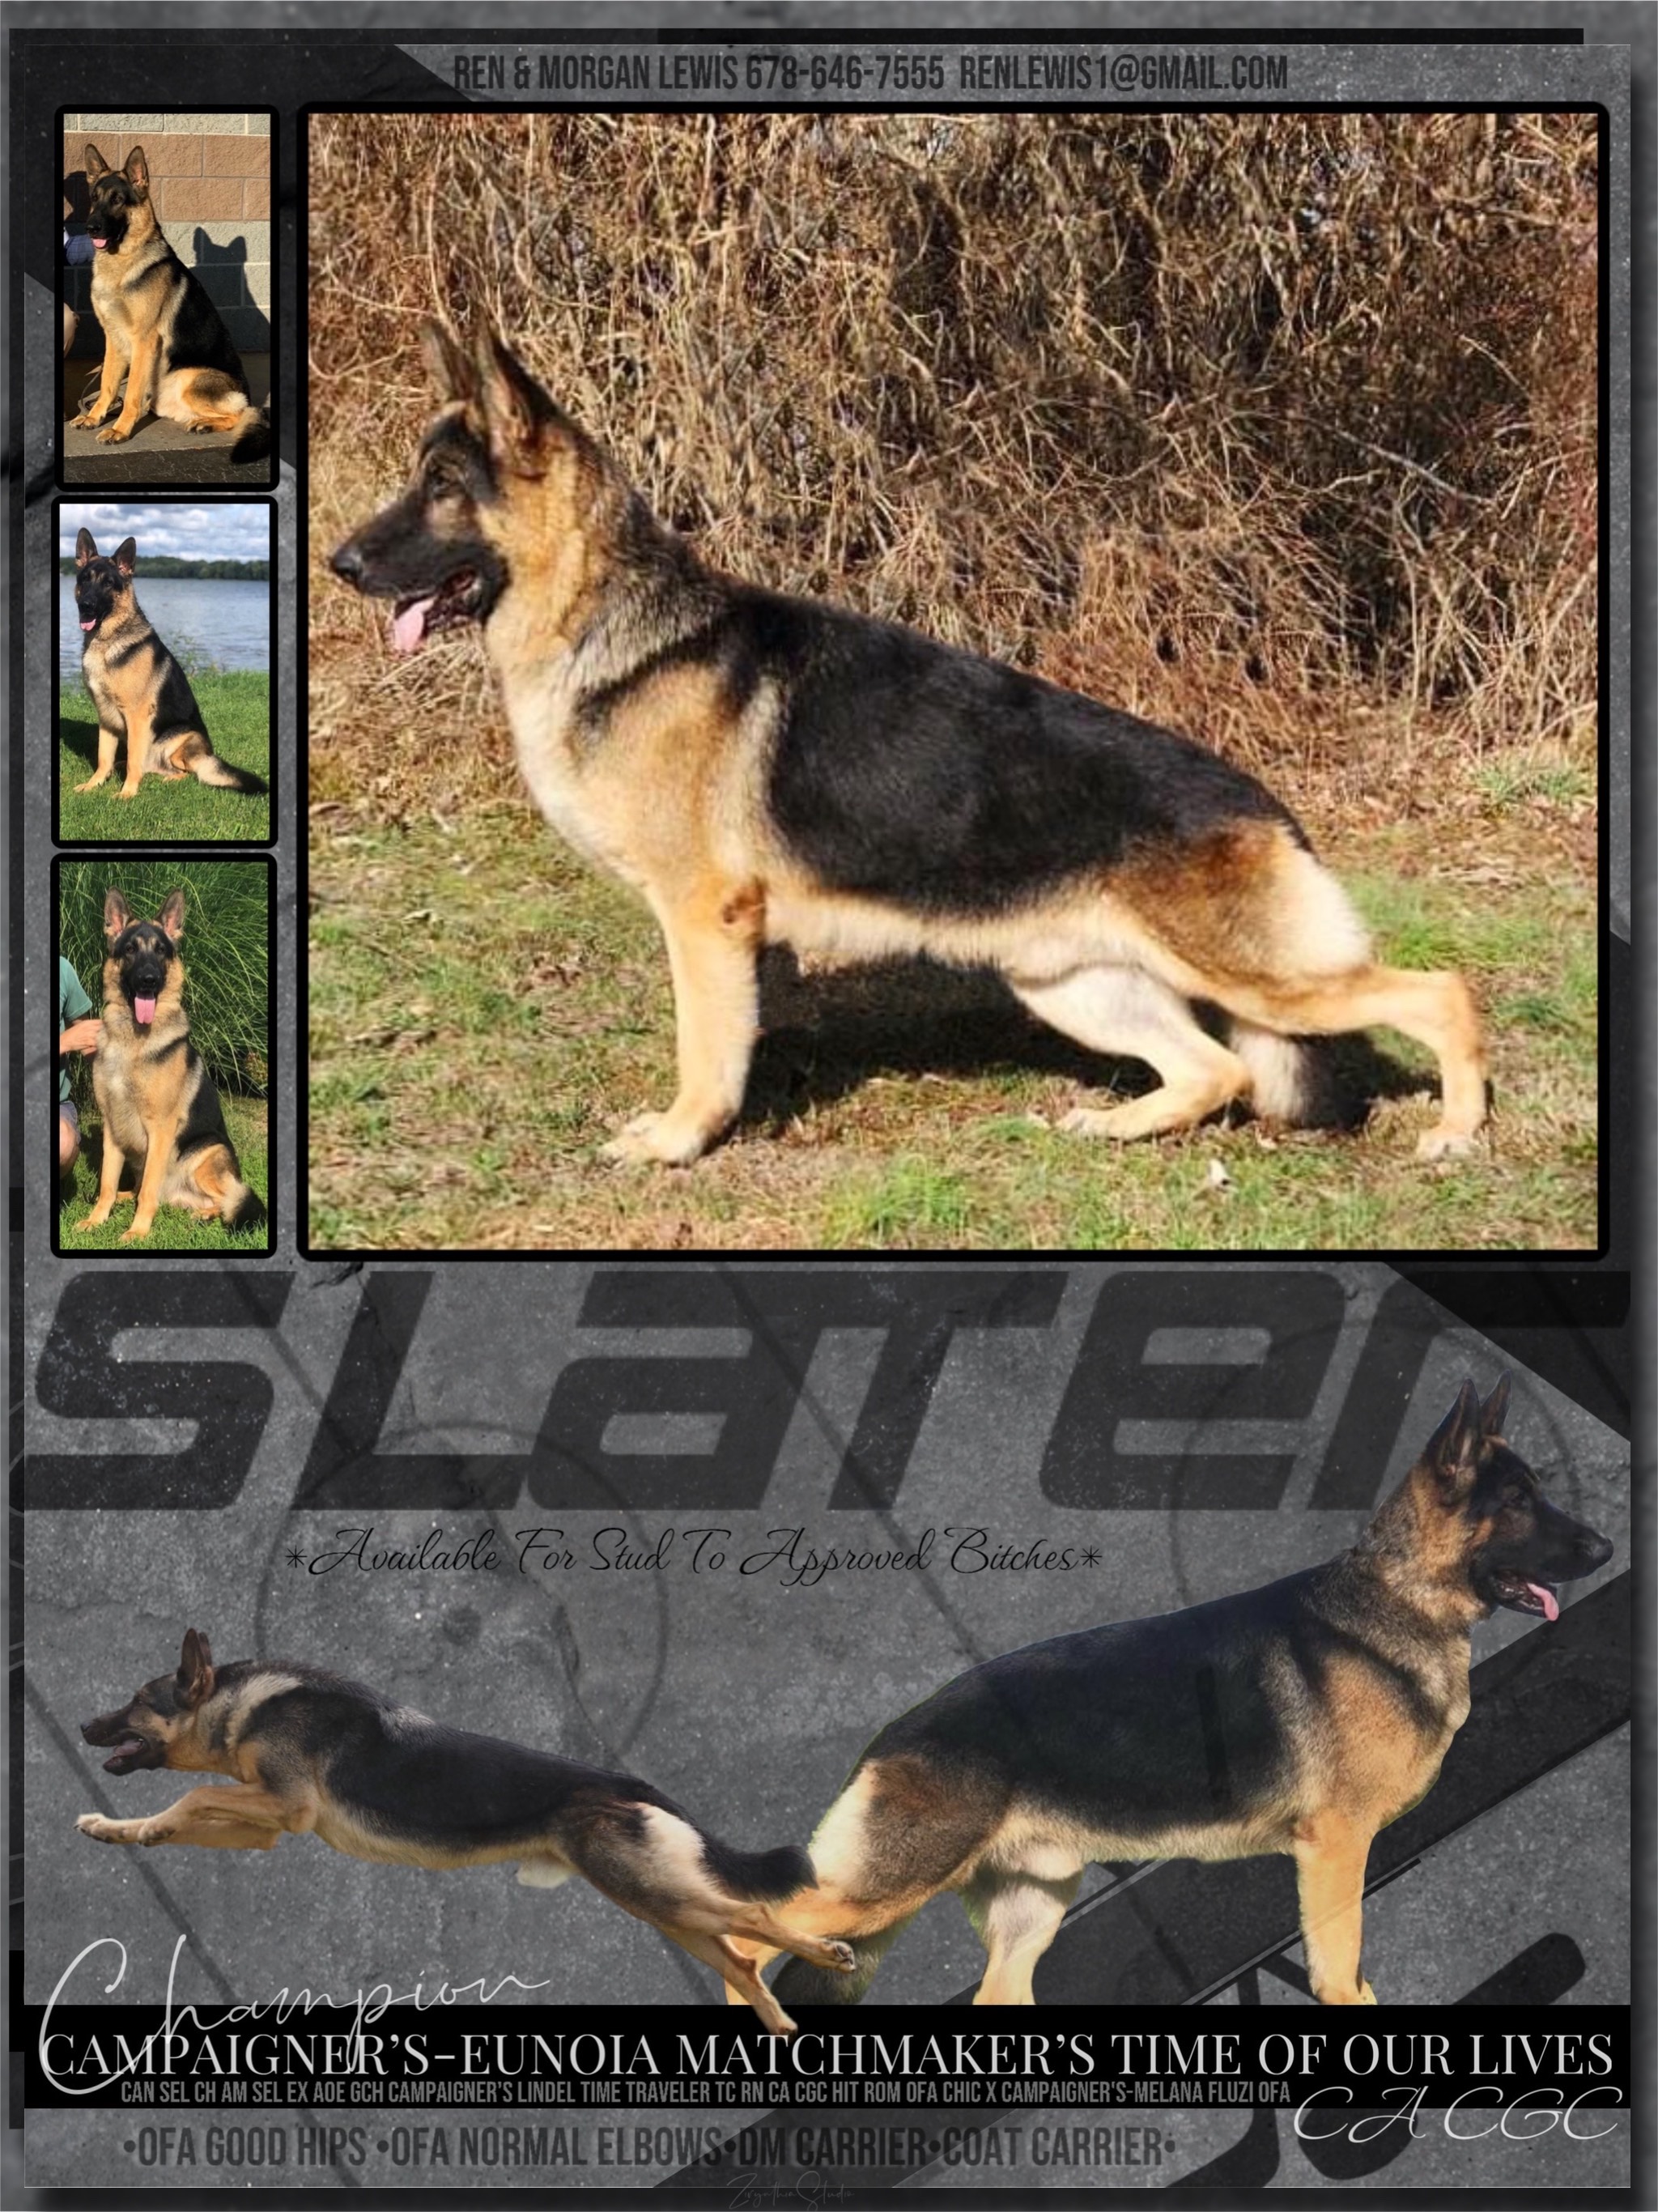 information on a german shepard dog called Slater